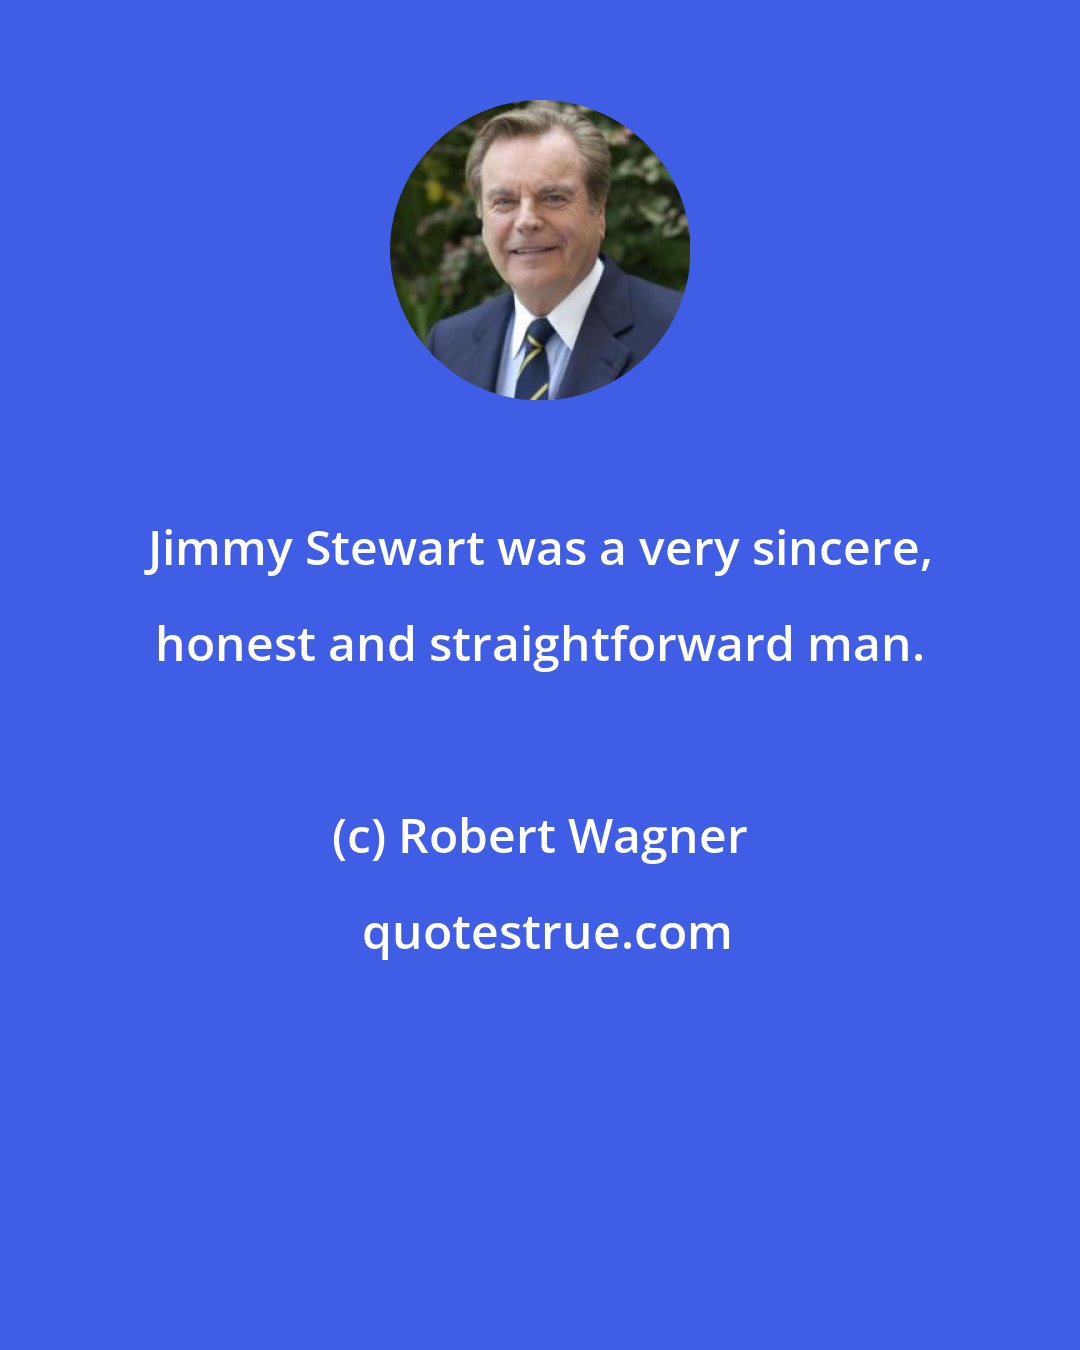 Robert Wagner: Jimmy Stewart was a very sincere, honest and straightforward man.